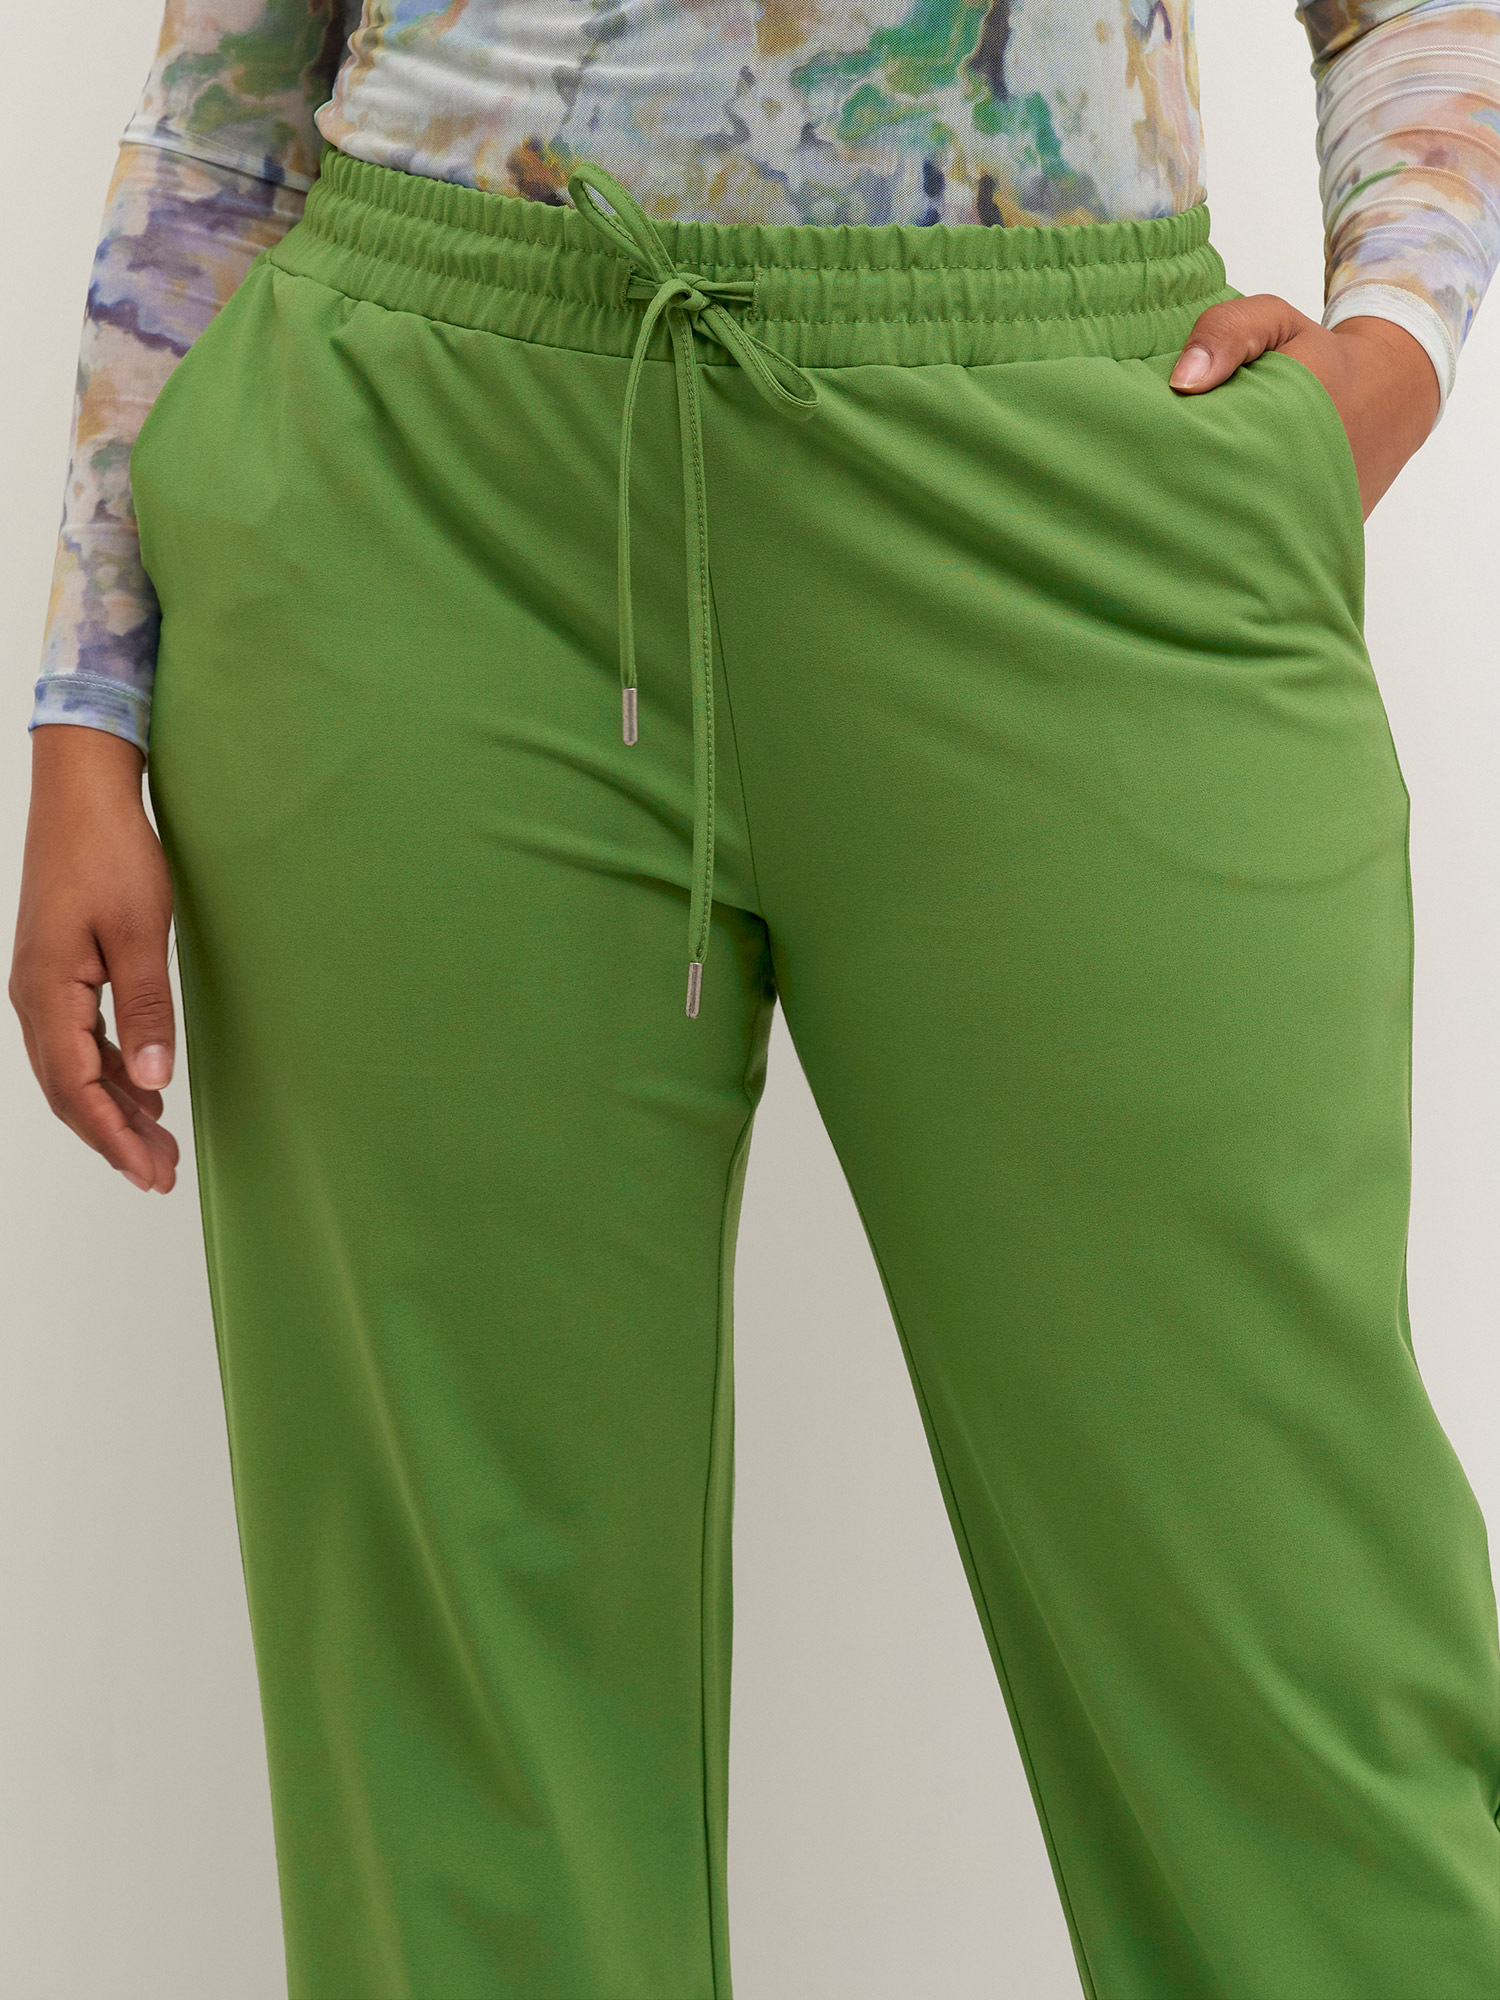 KC COLETTA - Smarte grønne bukser fra Kaffe Curve